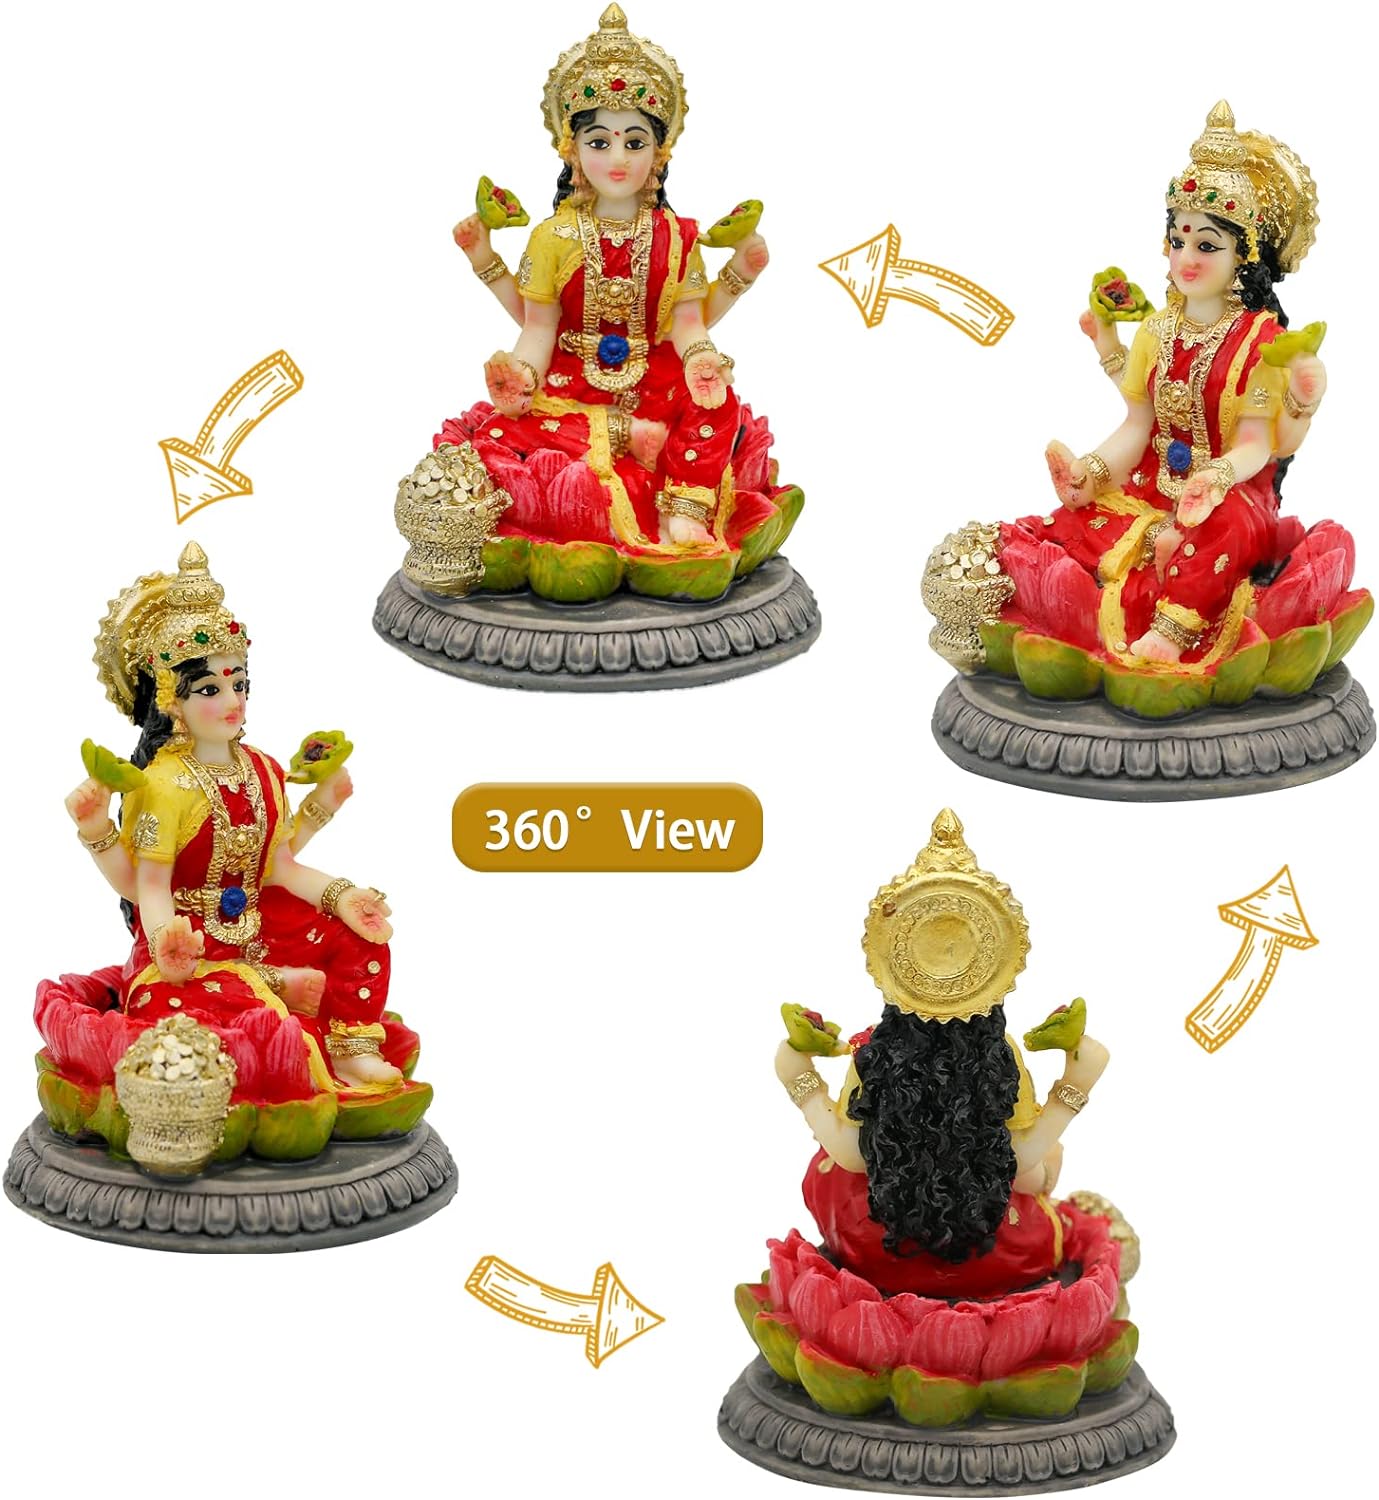 Small Hindu Goddess Lakshmi Statue - 3.9”H Indian Ido Laxmi Figurine for Car Dash Board Decor Home Office Mandir Temple Altar Shrine Pooja Item Murti for Diwali Puja Gifts